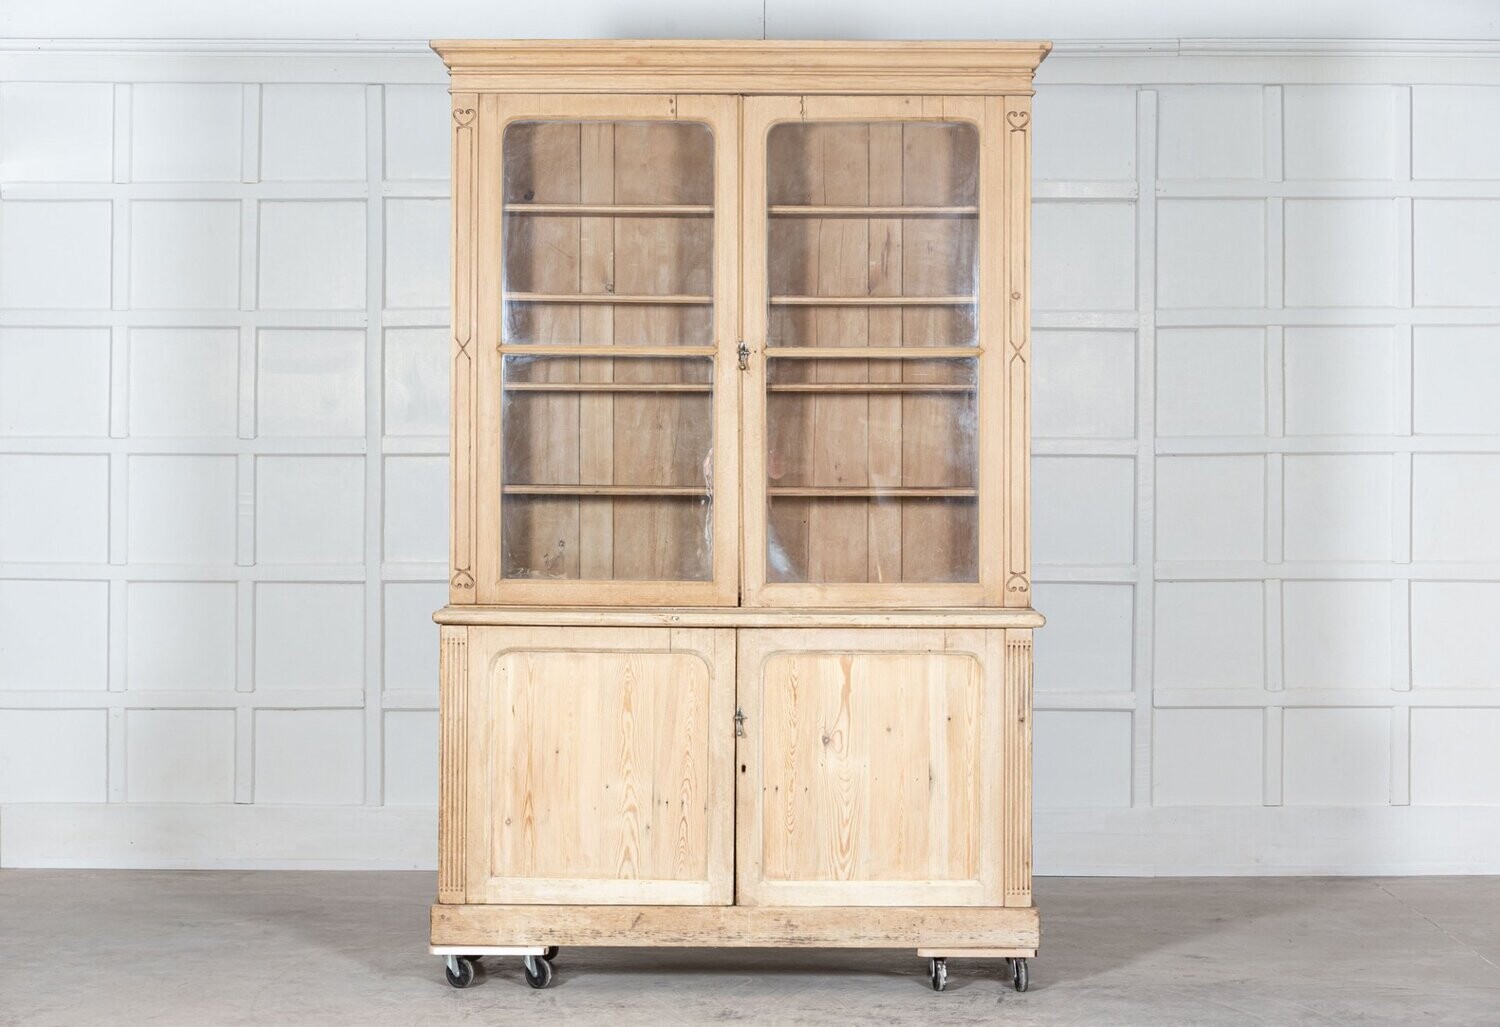 19thC English Pine Glazed Dresser Cabinet